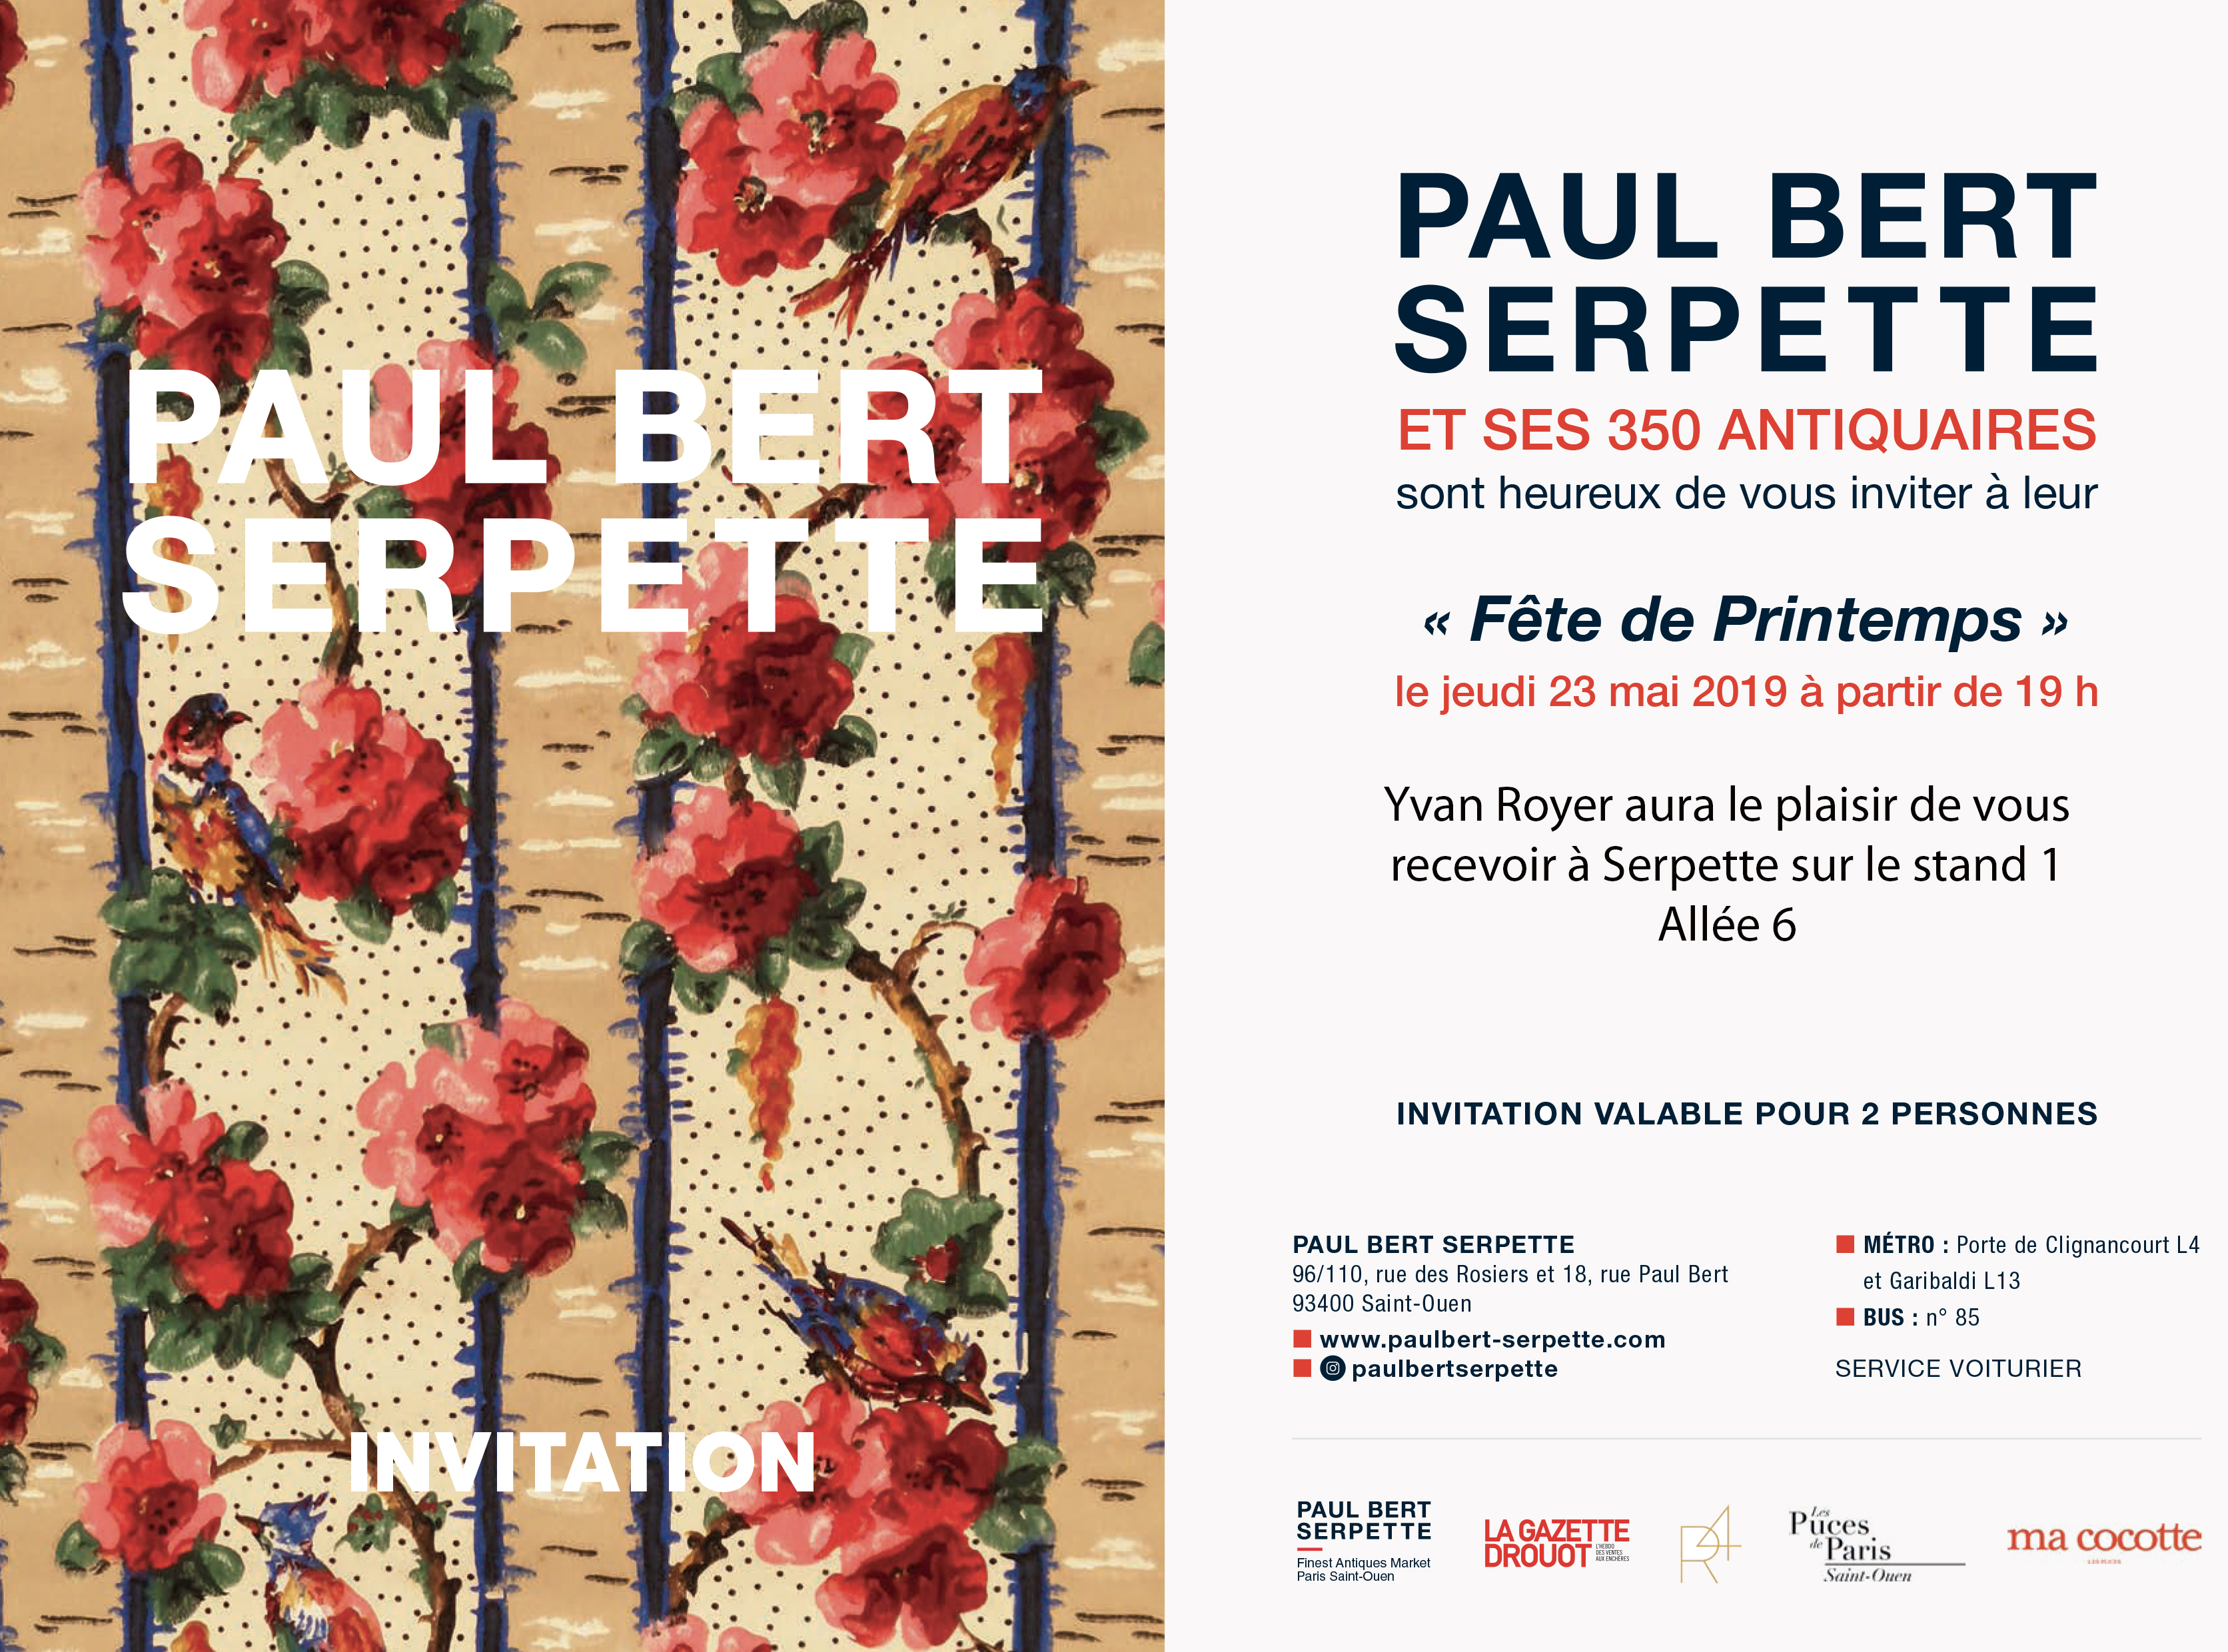 Paul Bert Serpette Invitation 23 mai 2019 - Fete du Printemps WEB